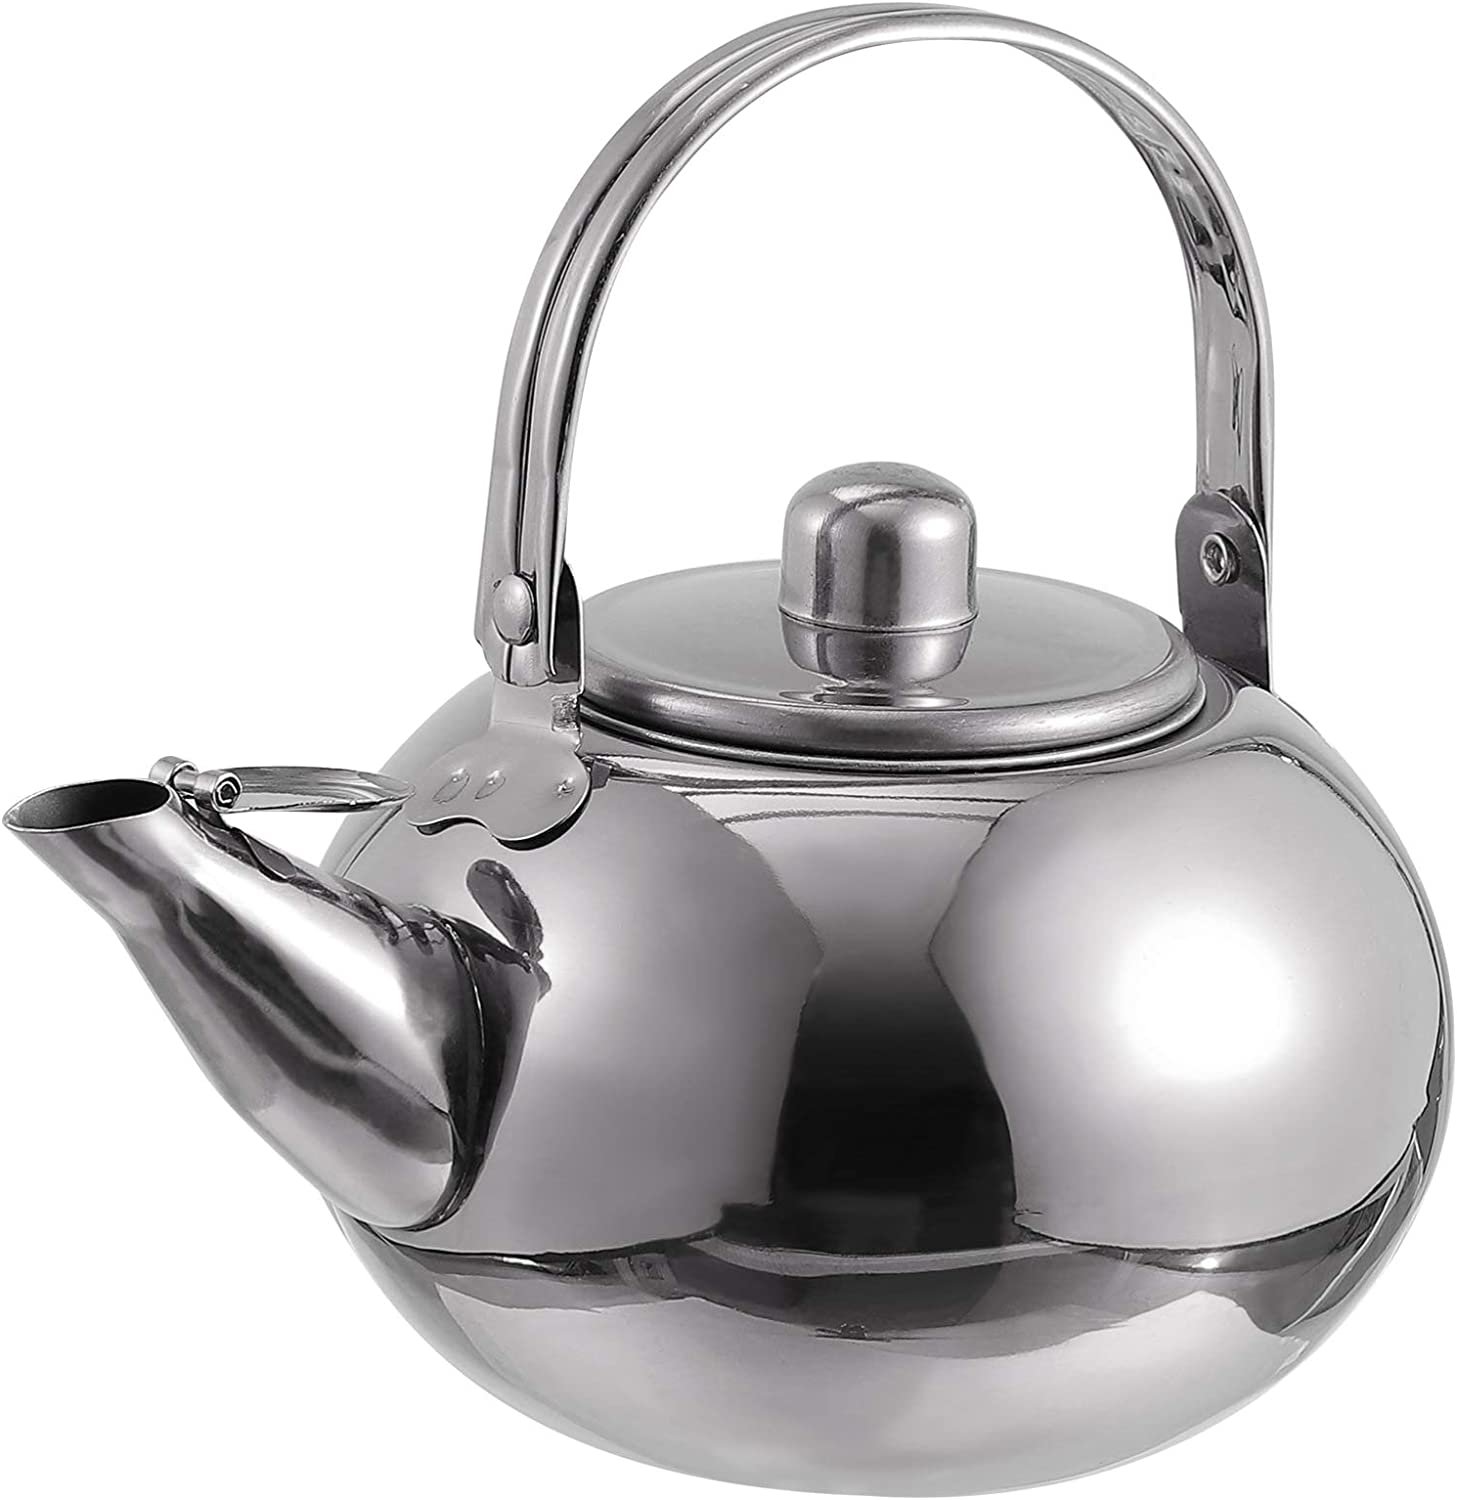 Cabilock Stainless Steel Tea Pot with Filter Metal Tea Kettle Teapot Stove Whistles Tea Pot Tea Maker Tea Kettle Silver